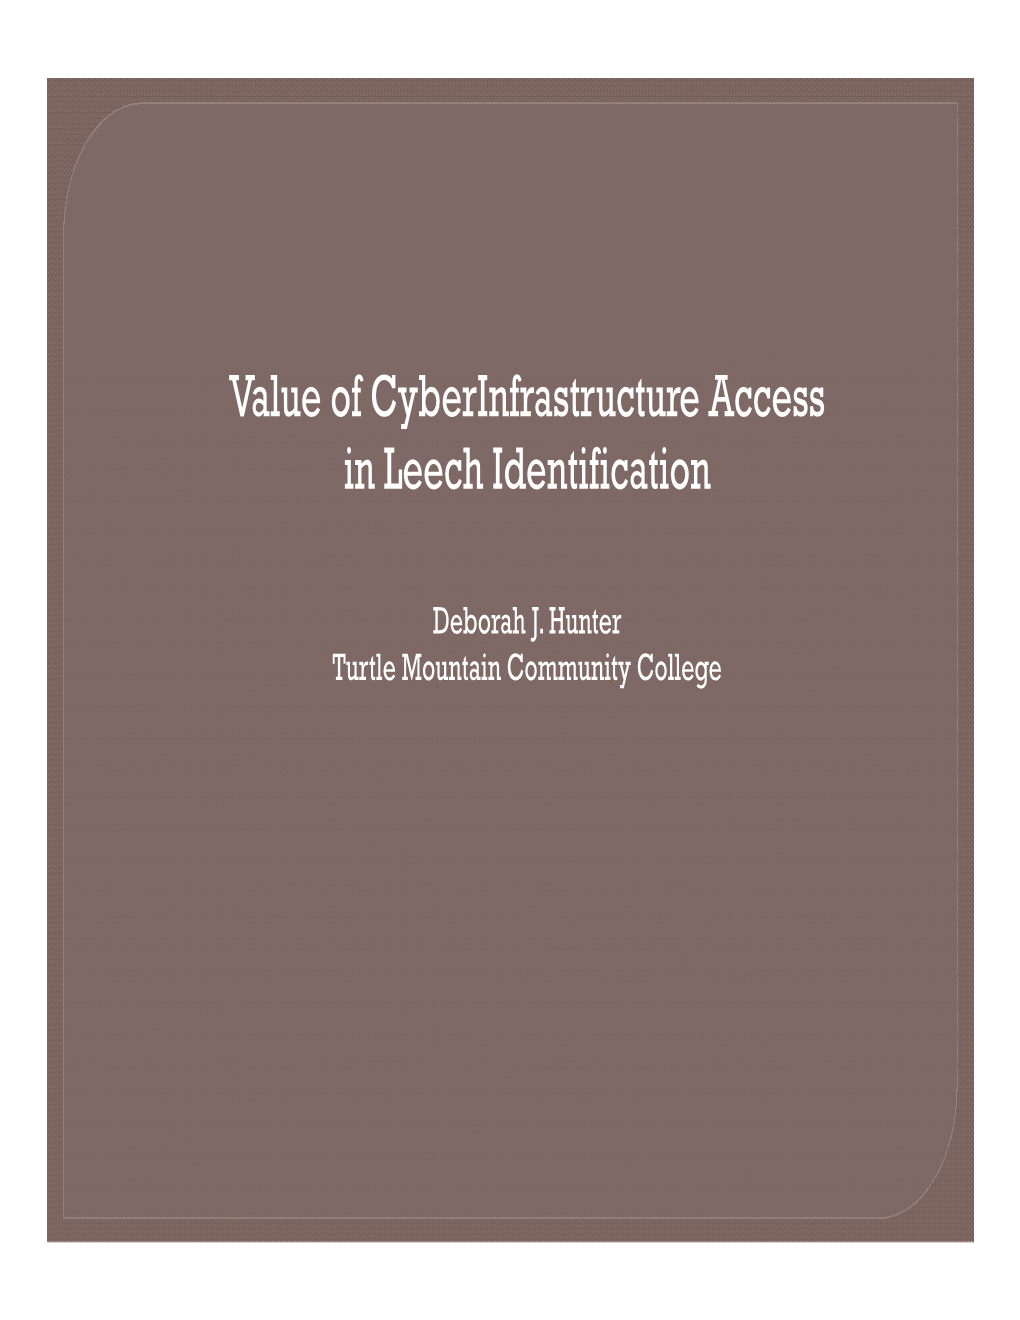 Value of Cyberinfrastructure Access in Leech Identification